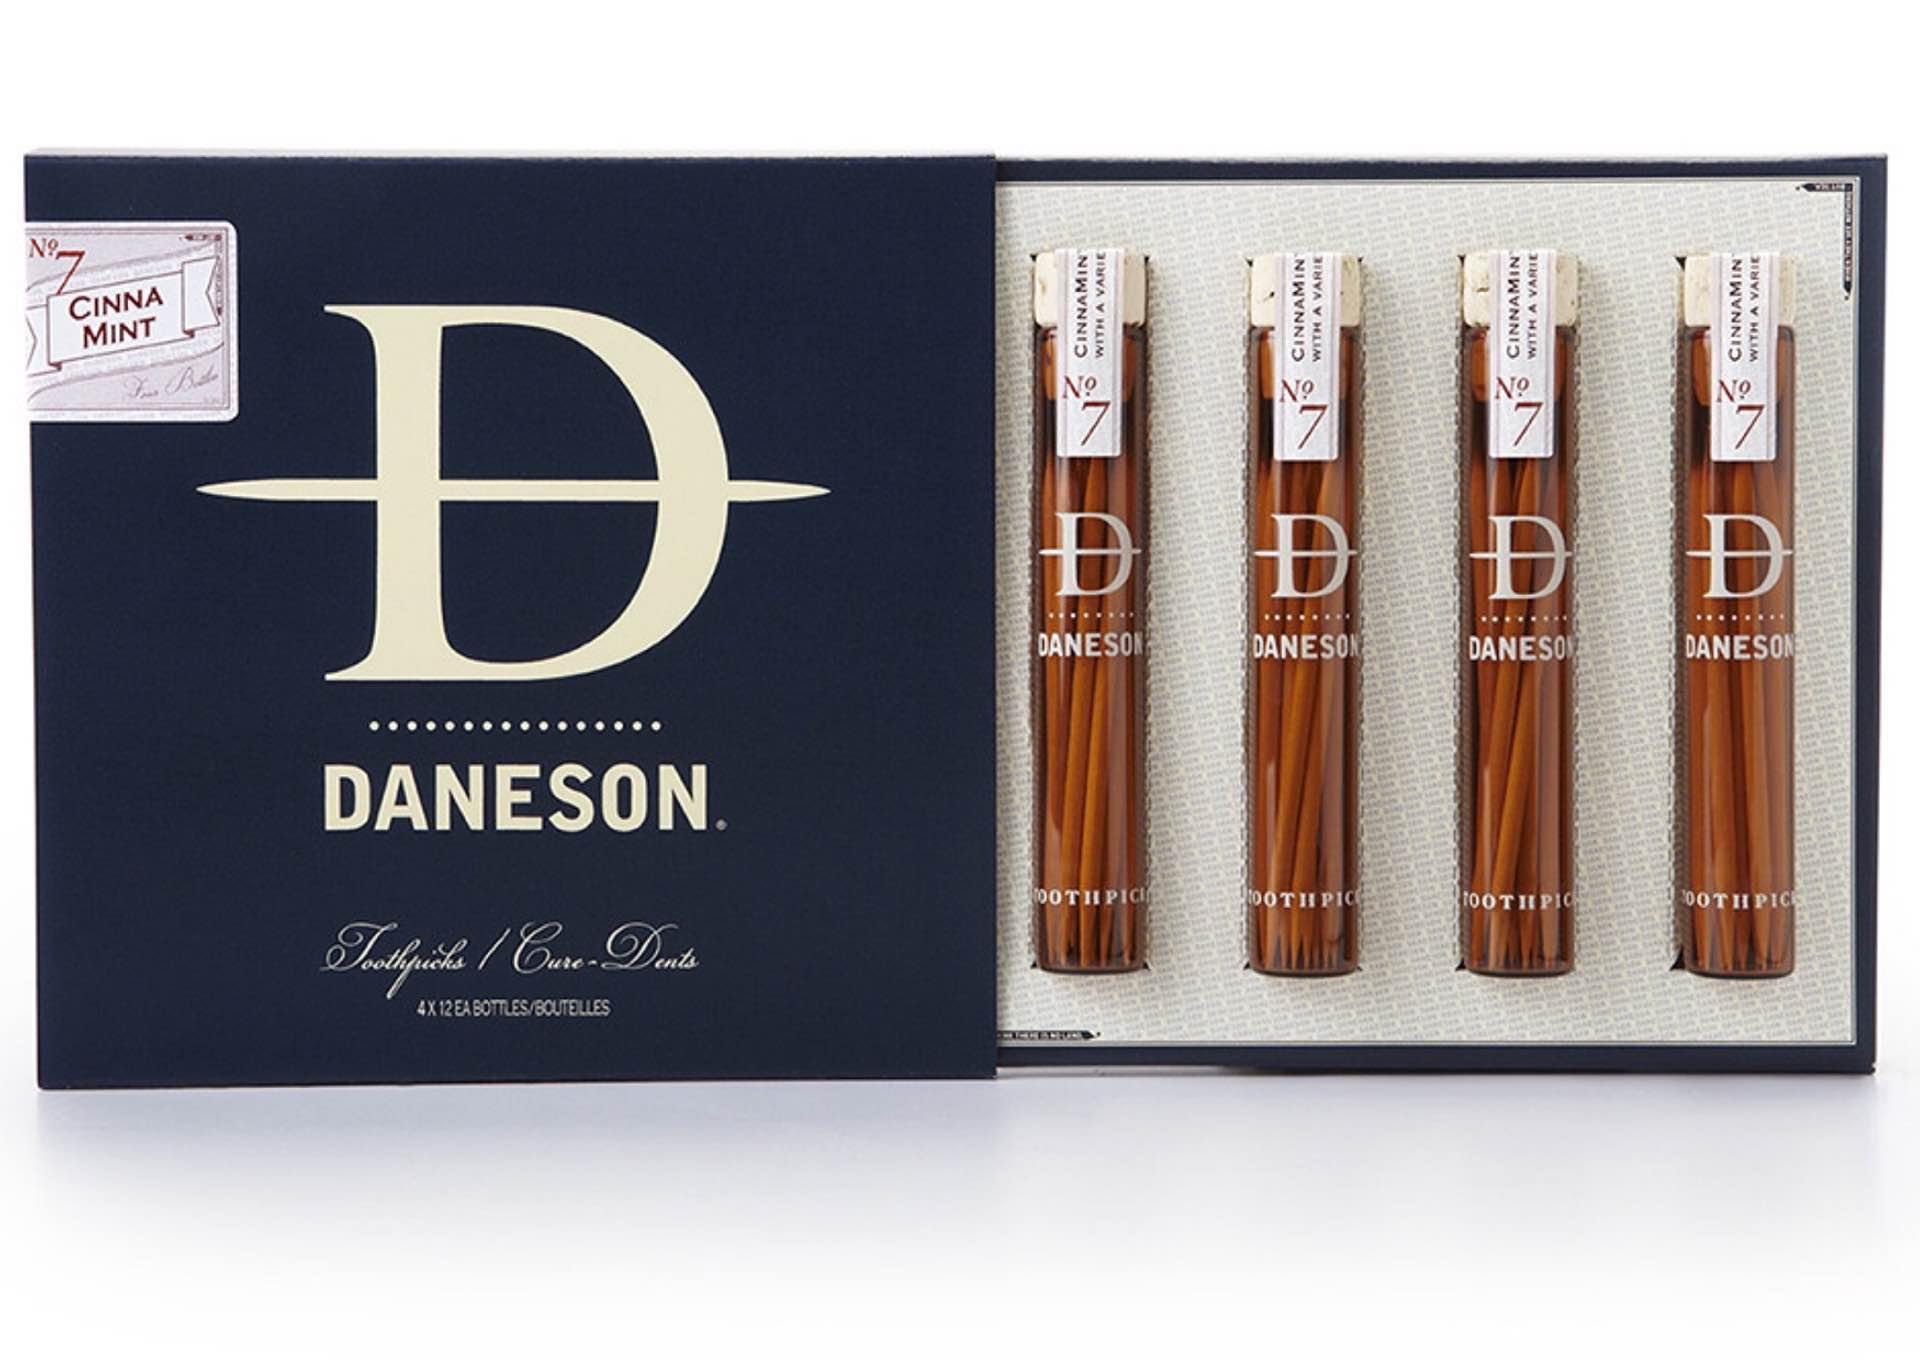 Daneson's "Cinnamint No. 7" toothpicks. ($20 per 4-bottle pack, or $120 for a 24-bottle case)